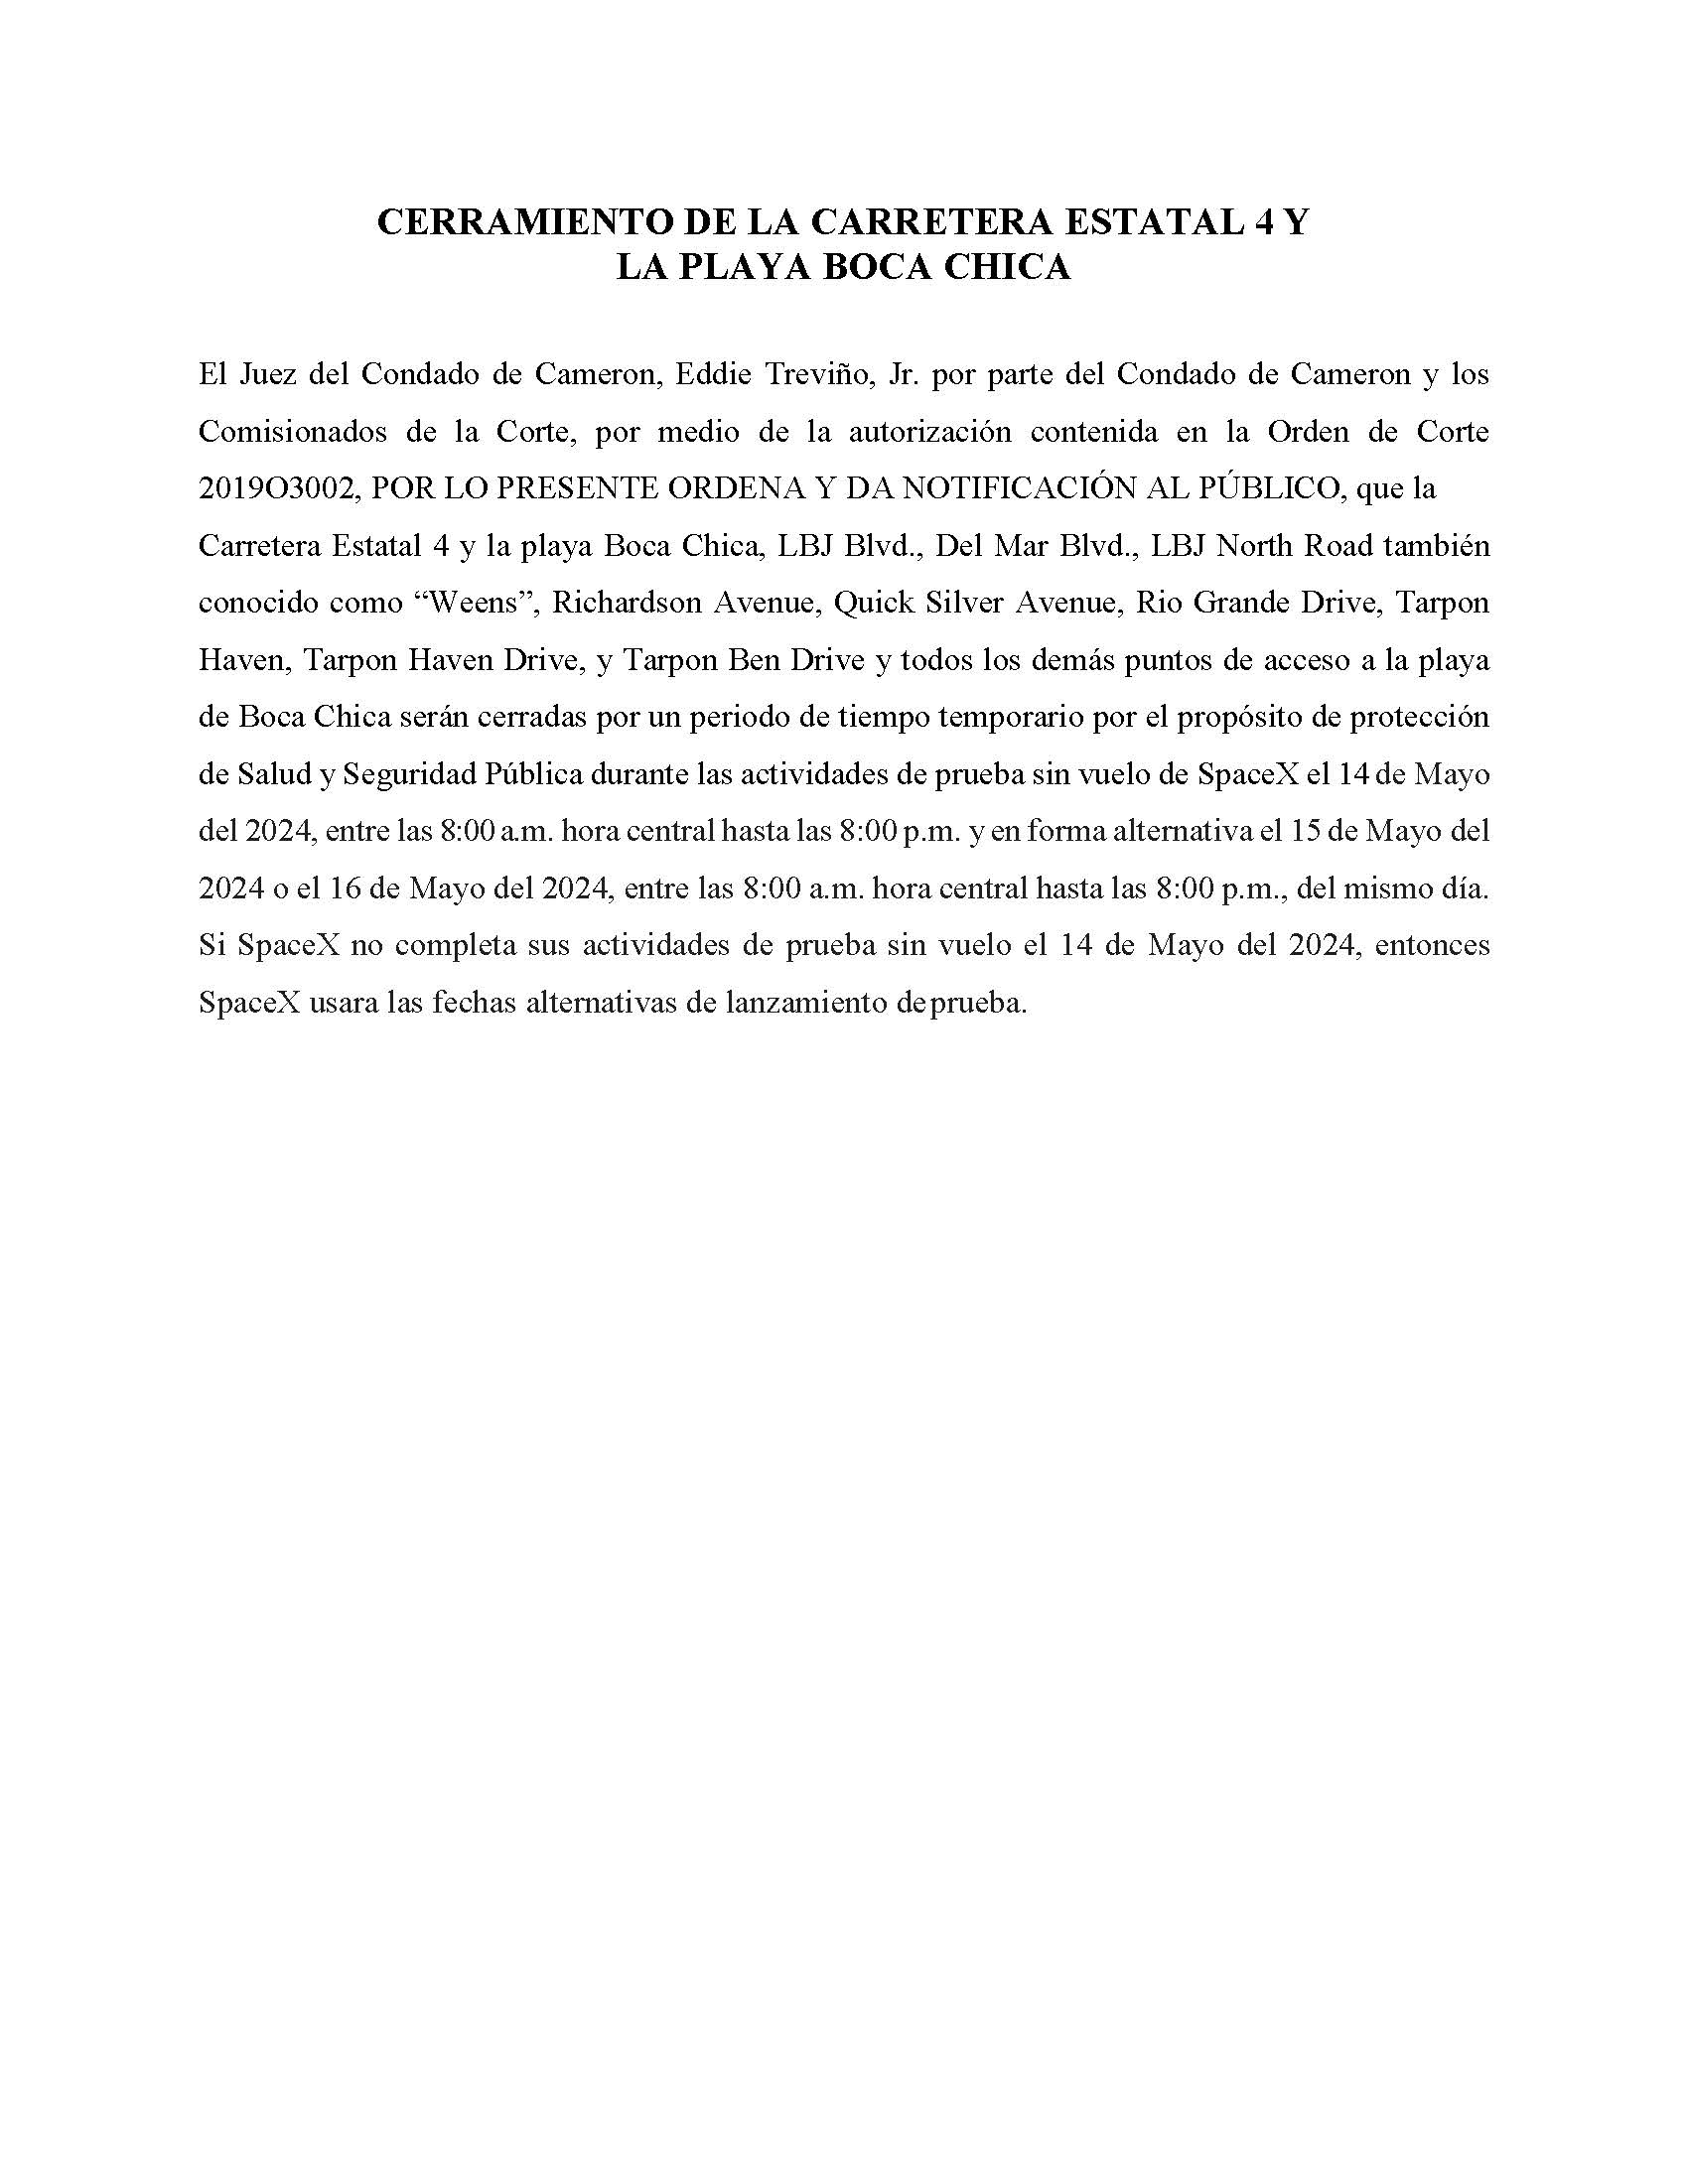 ORDER.CLOSURE OF HIGHWAY 4 Y LA PLAYA BOCA CHICA.SPANISH.05.14.2024